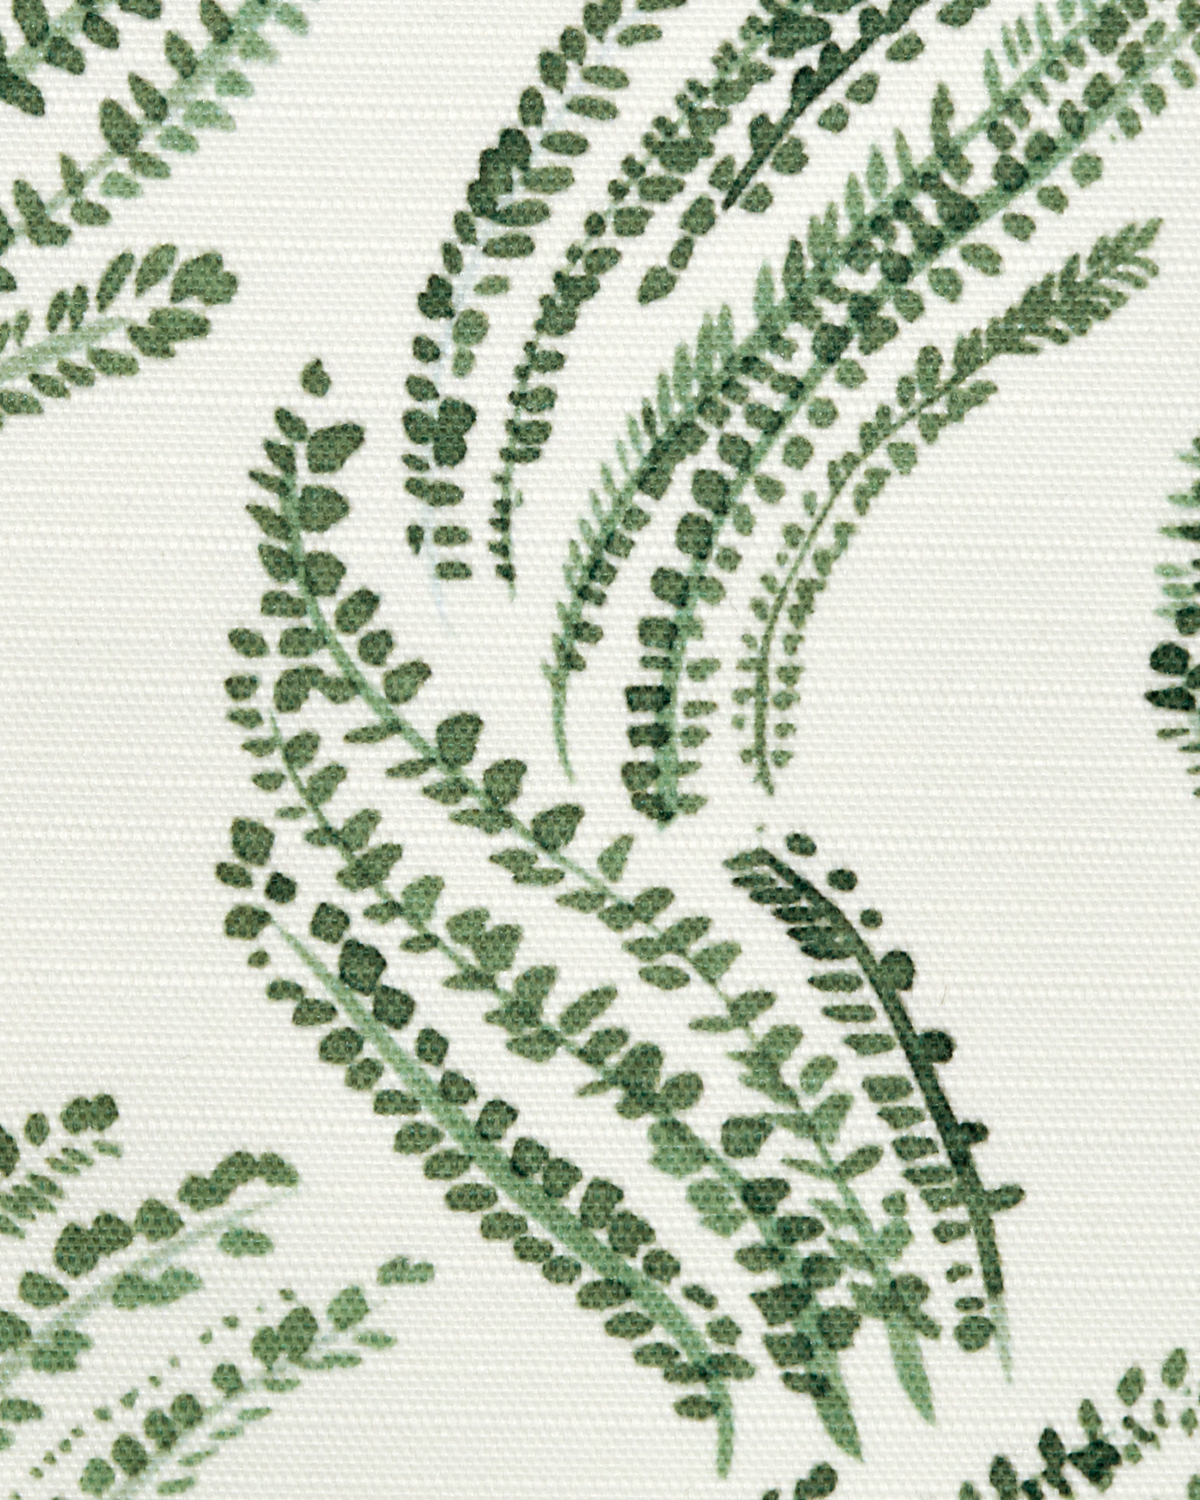 Wavy Grass Fabric in Leafy Green